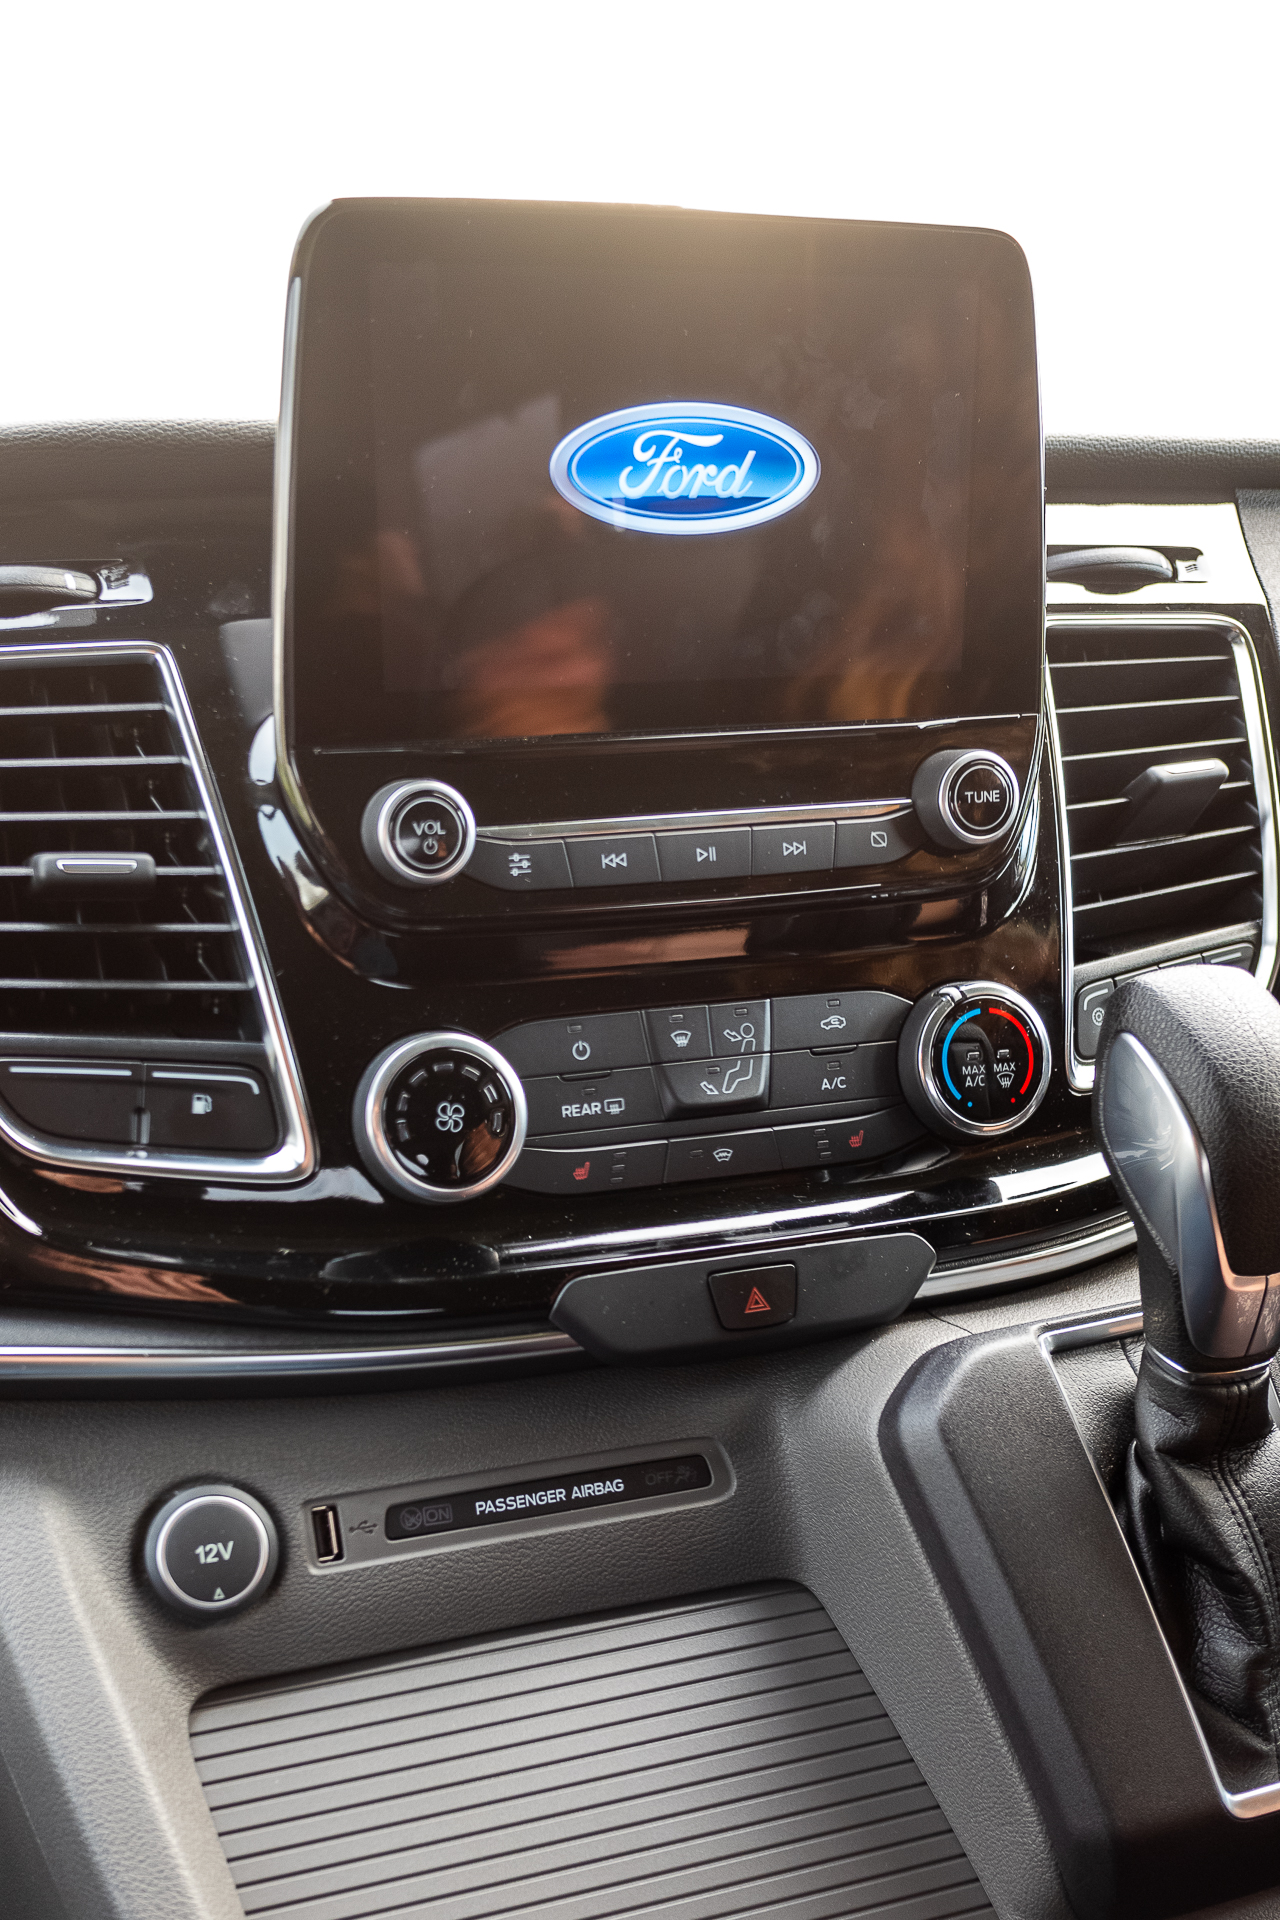 Ford Tourneo 9 seater hybrid plug-in l Honest Mum